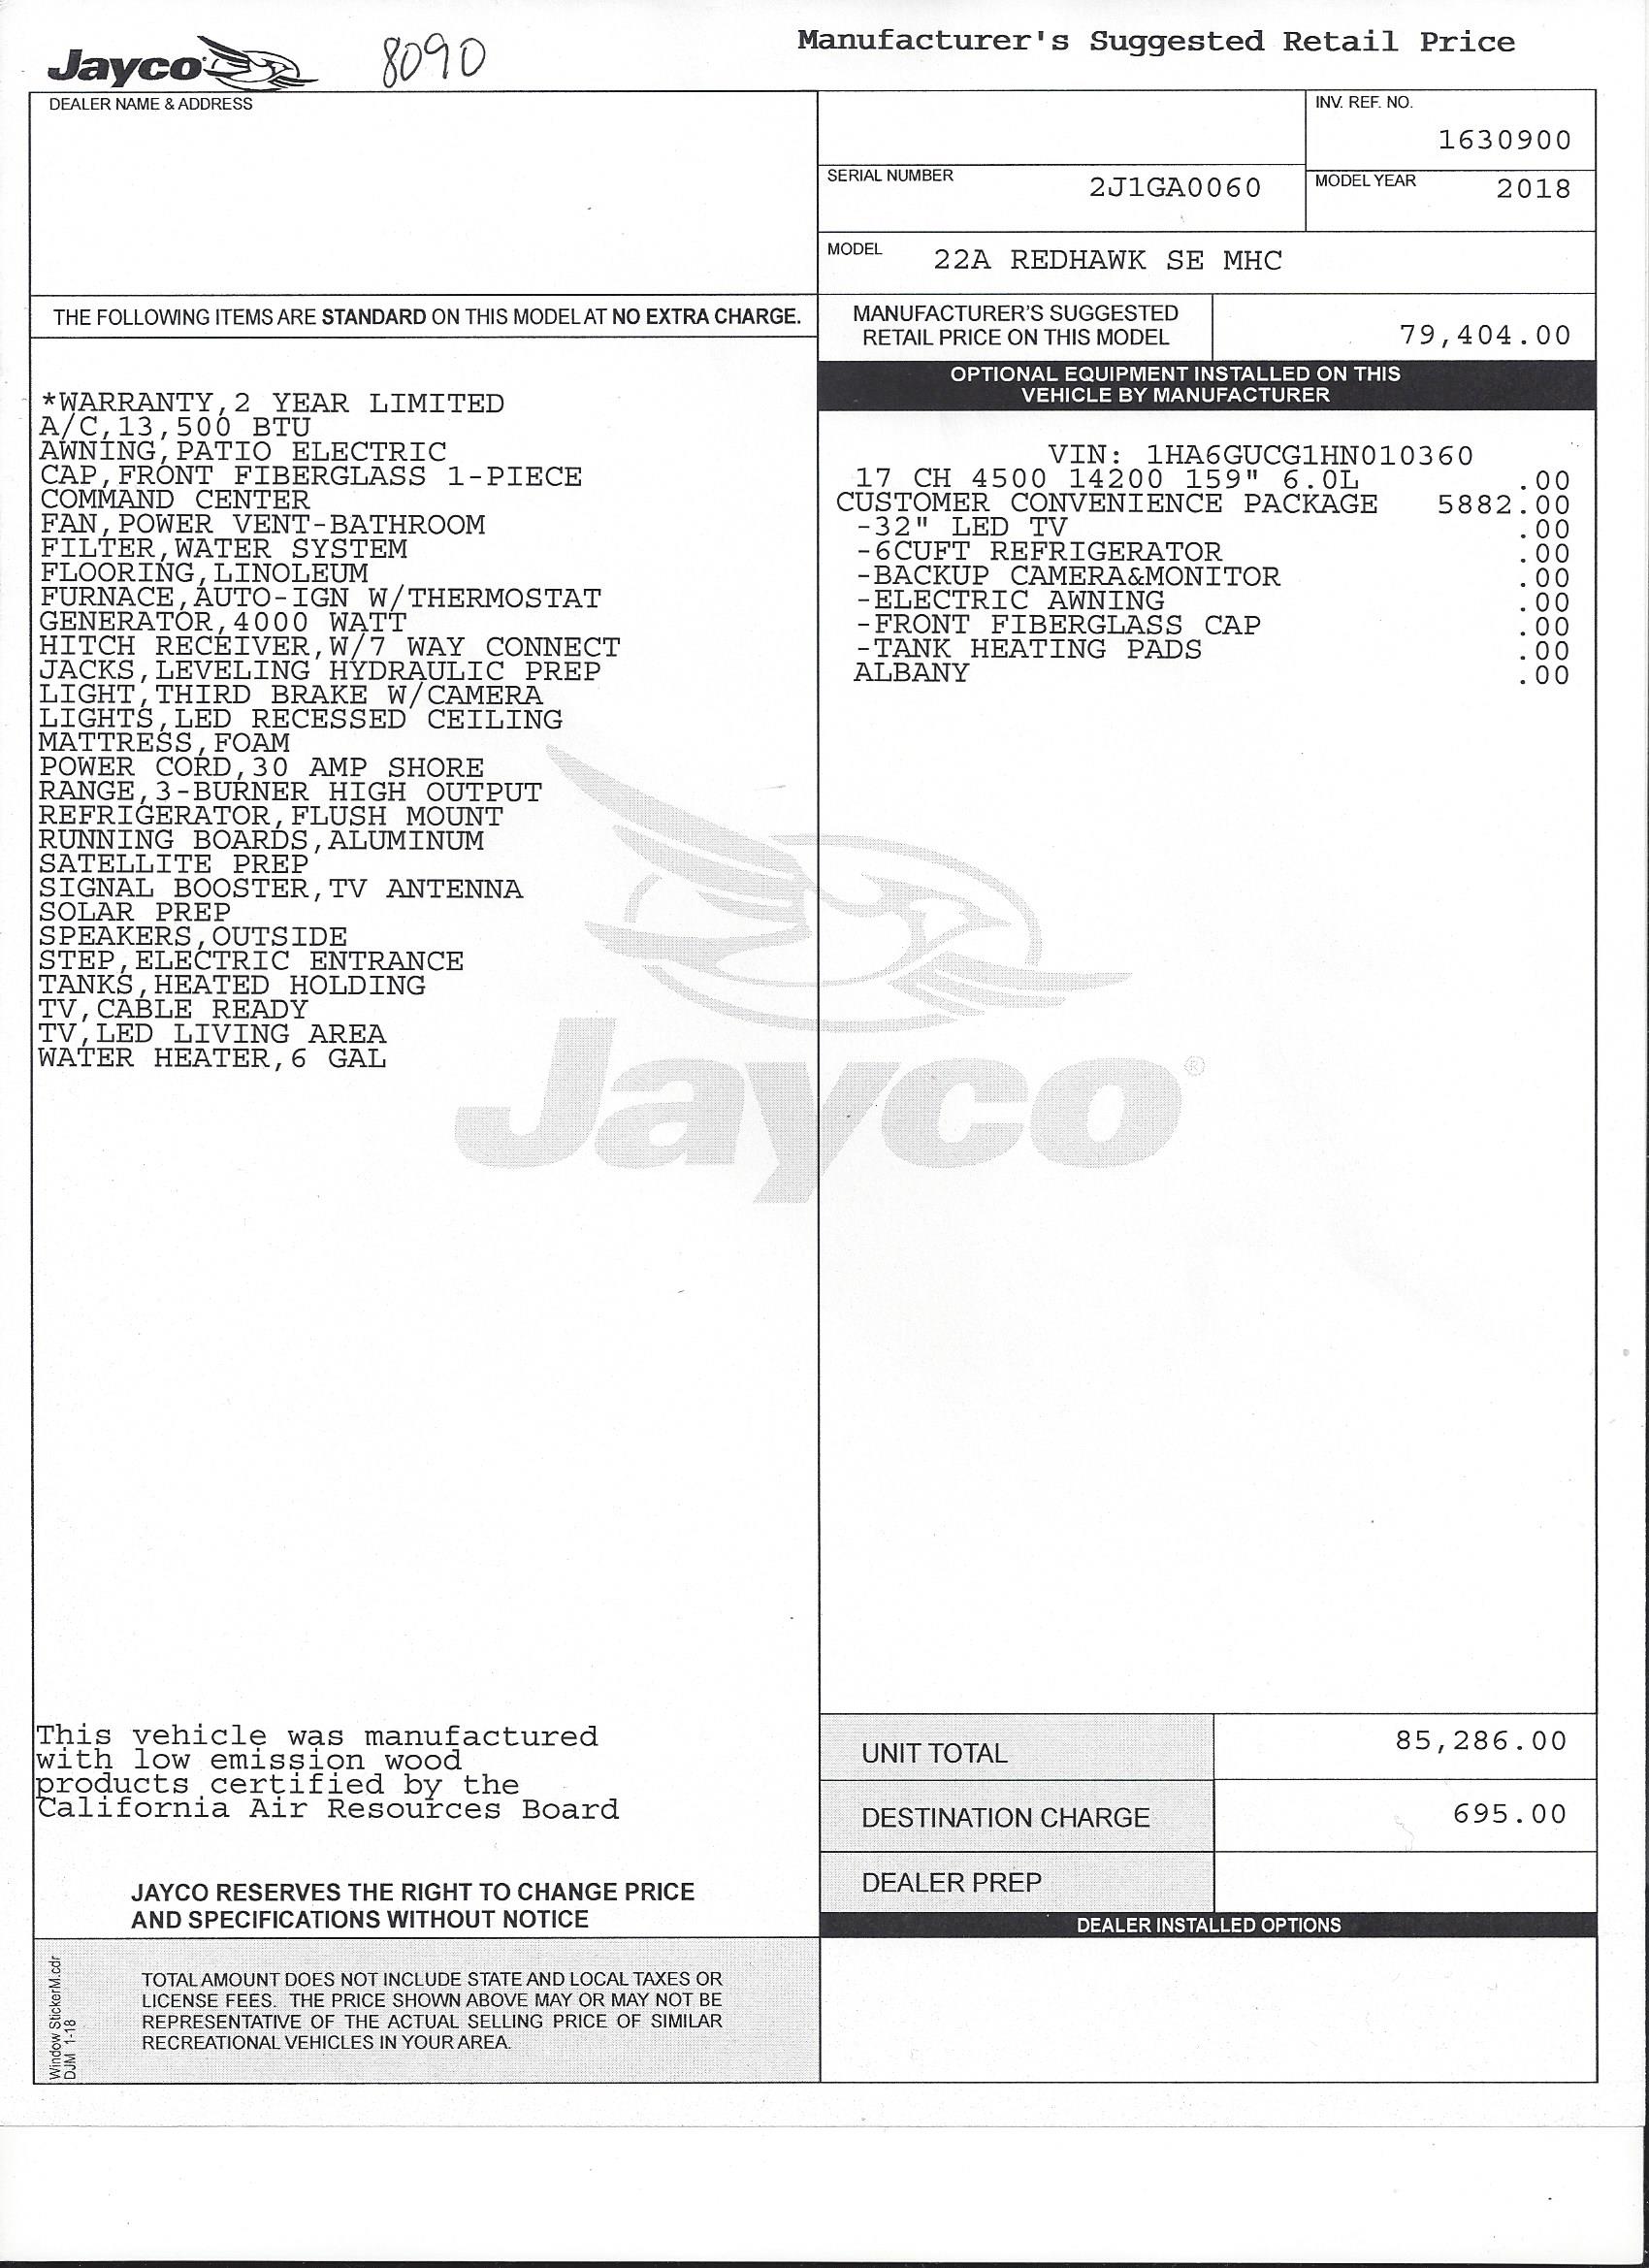 2018 Jayco Redhawk SE 22A MSRP Sheet